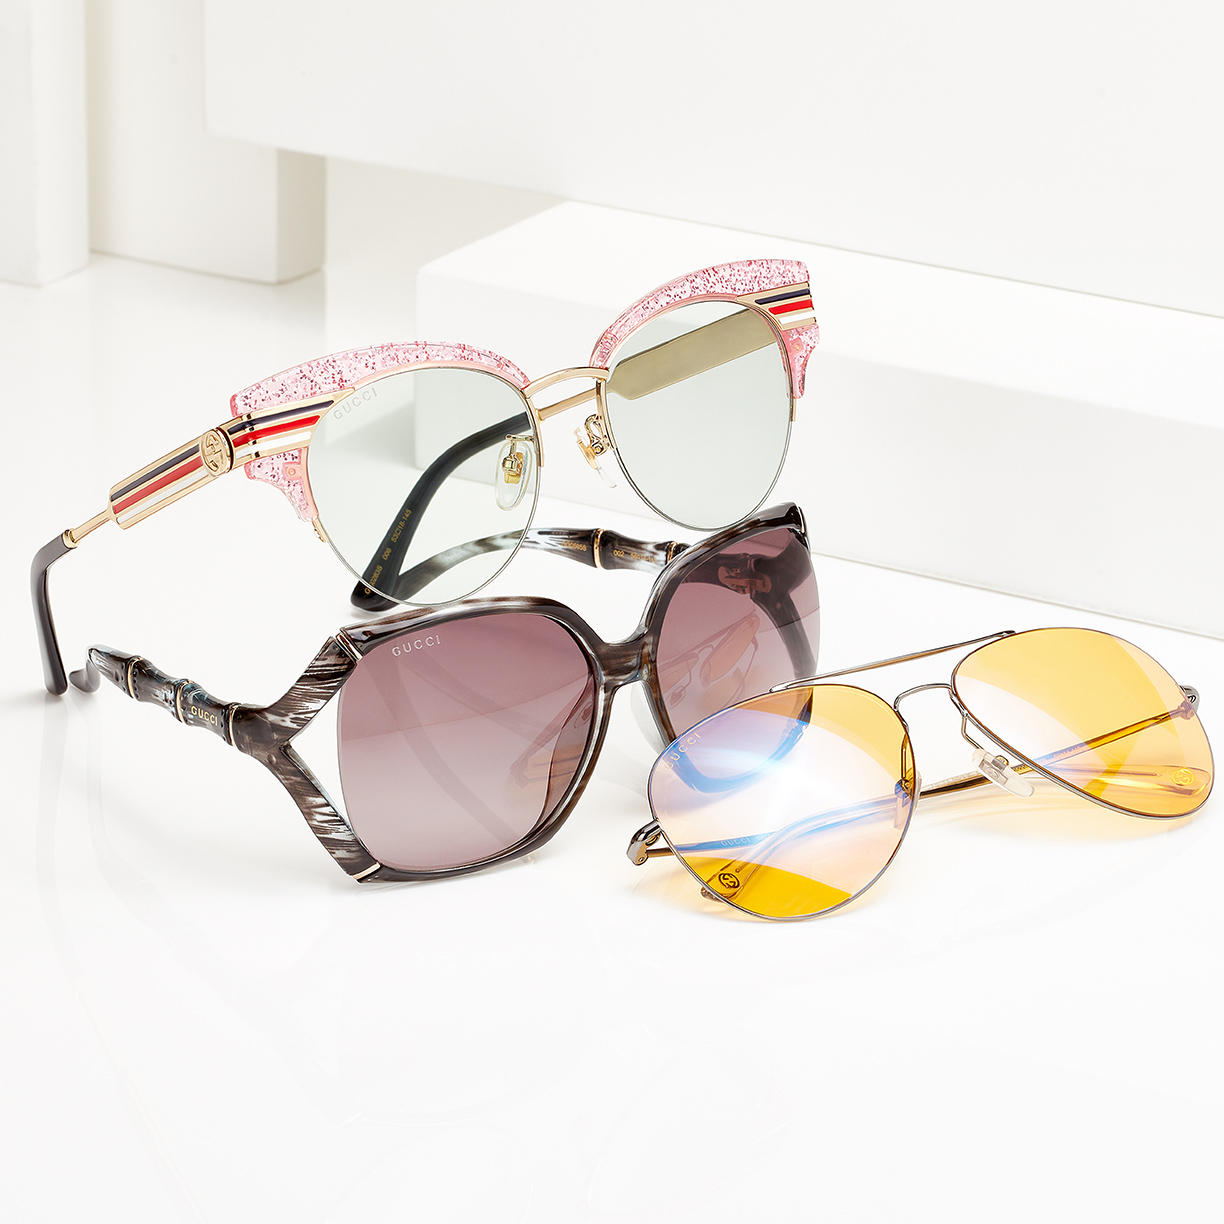 Designer Sunglasses up to 70% off